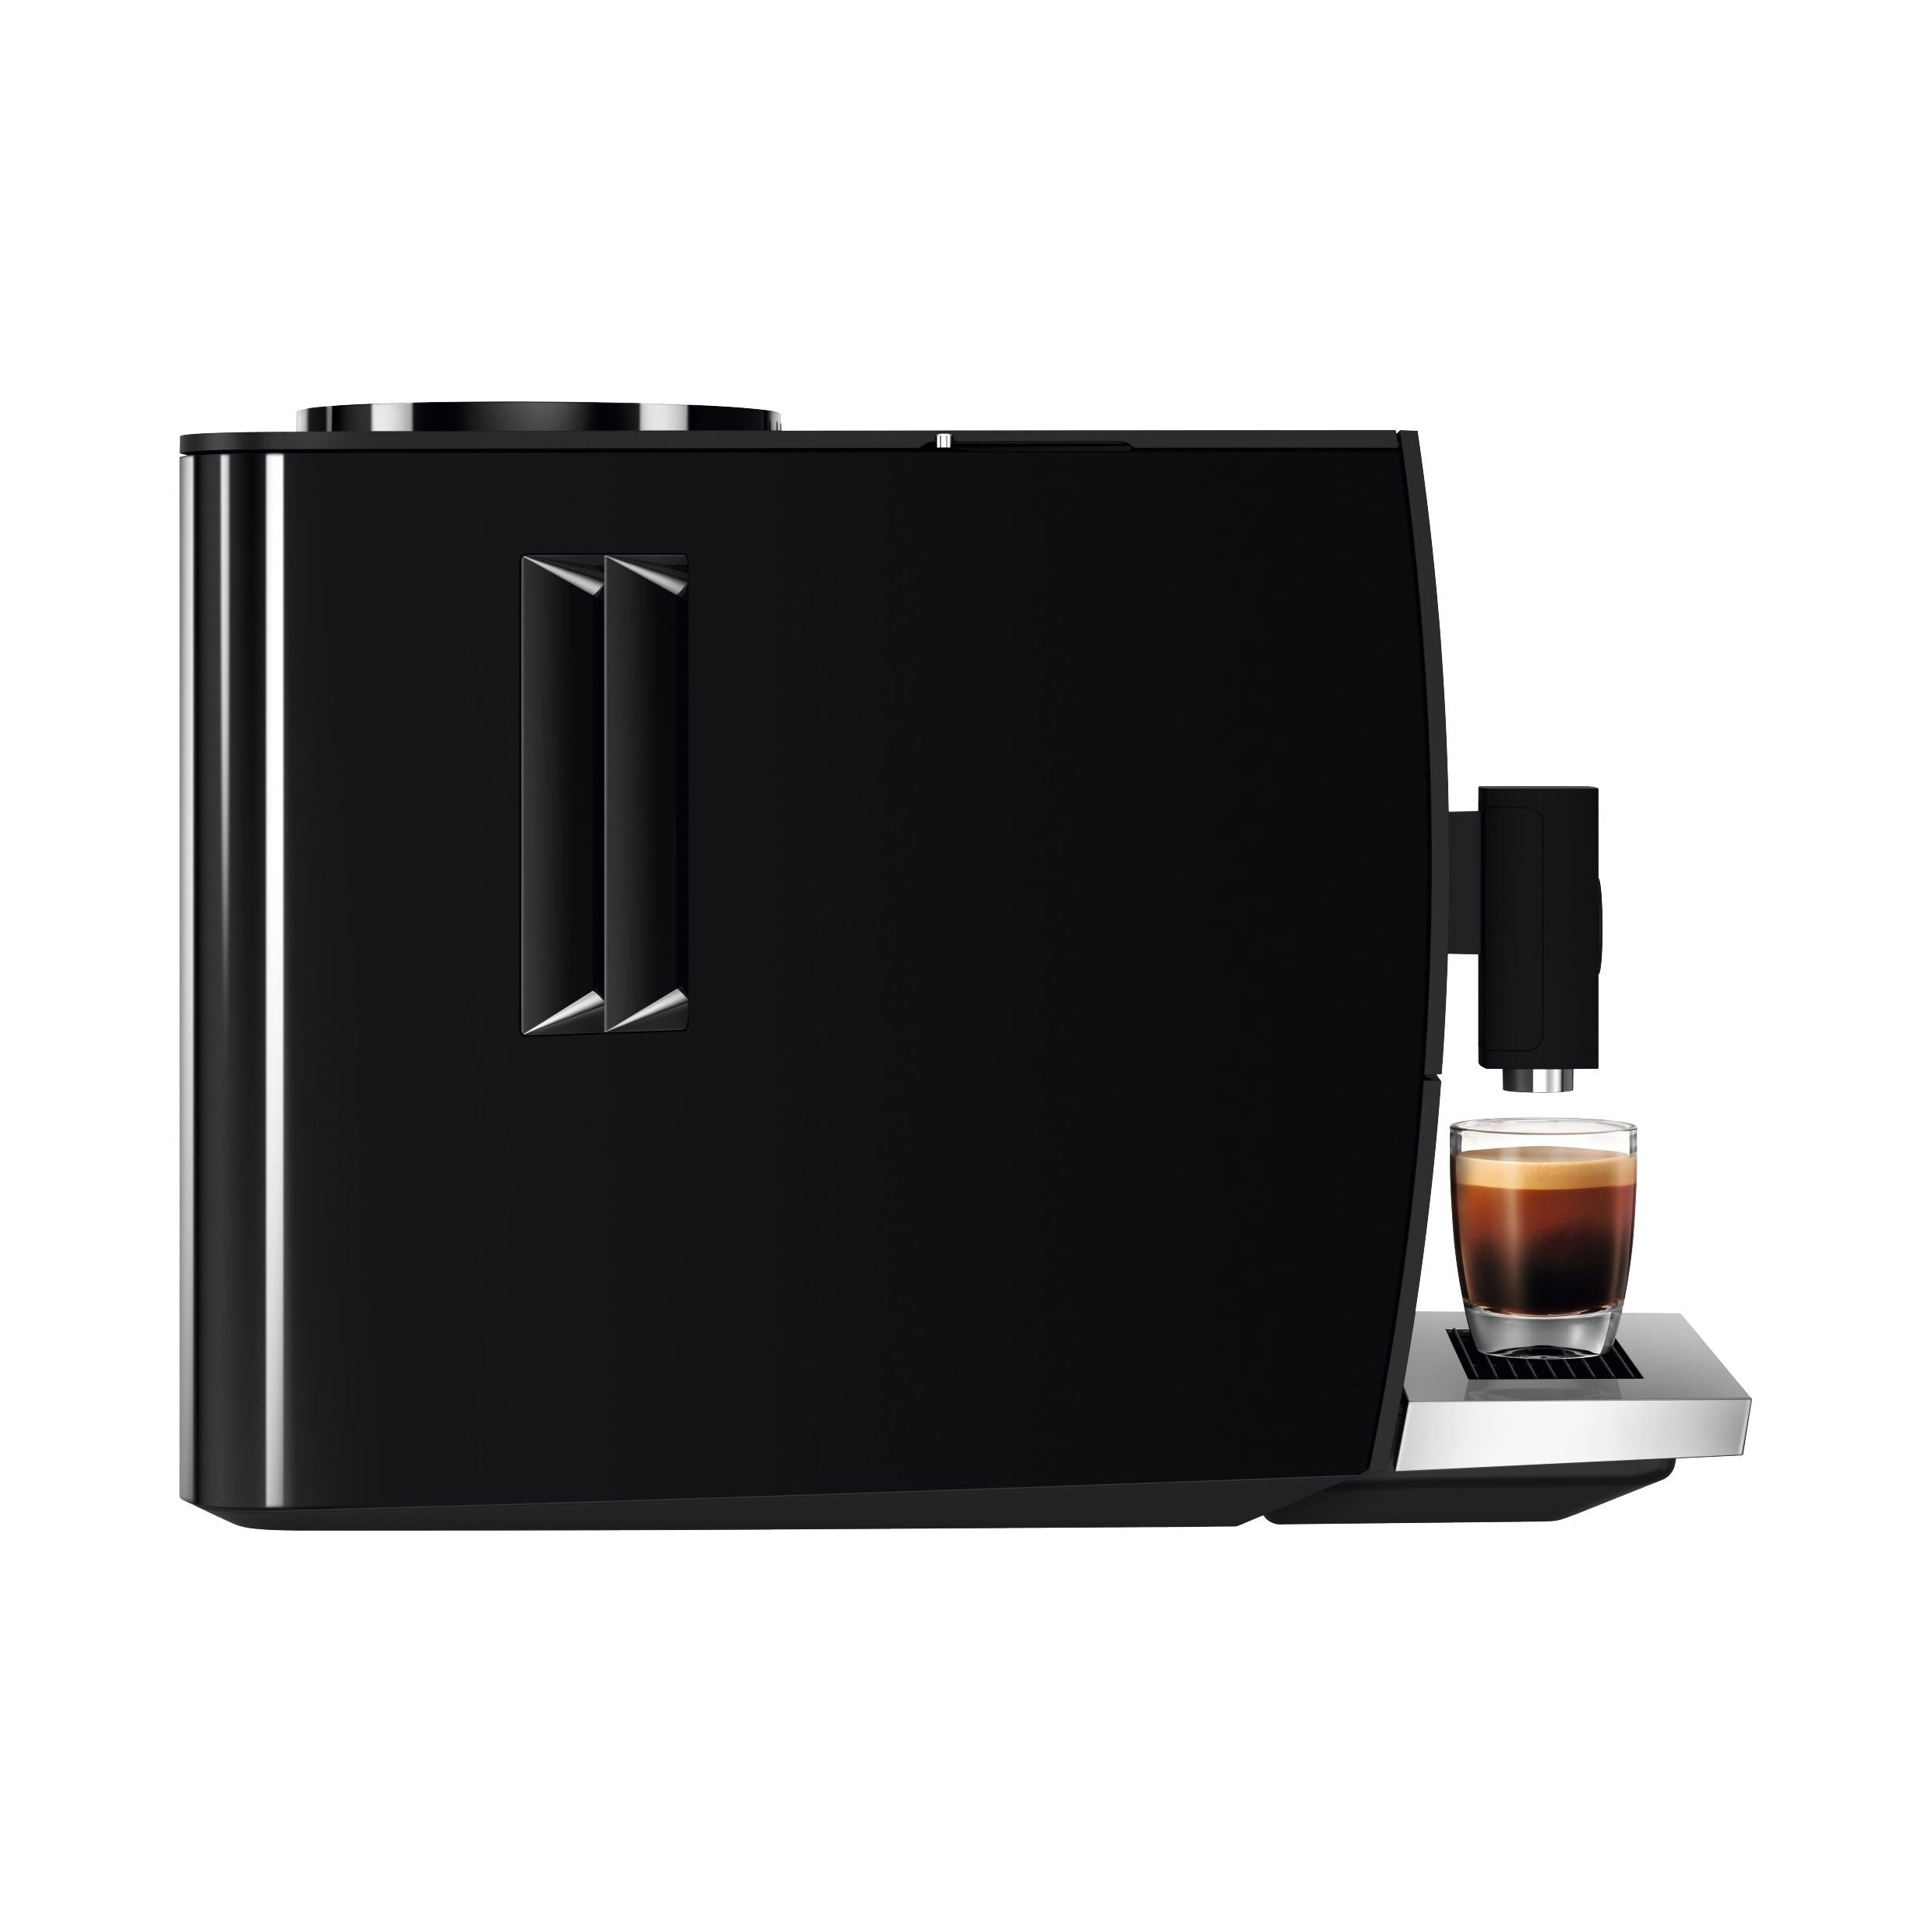 JURA ENA4 Full Metropolitan Black (EB) - Kaffeevollautomat 15501 Kaffeevollautomat JURA    - Rheinland.Coffee